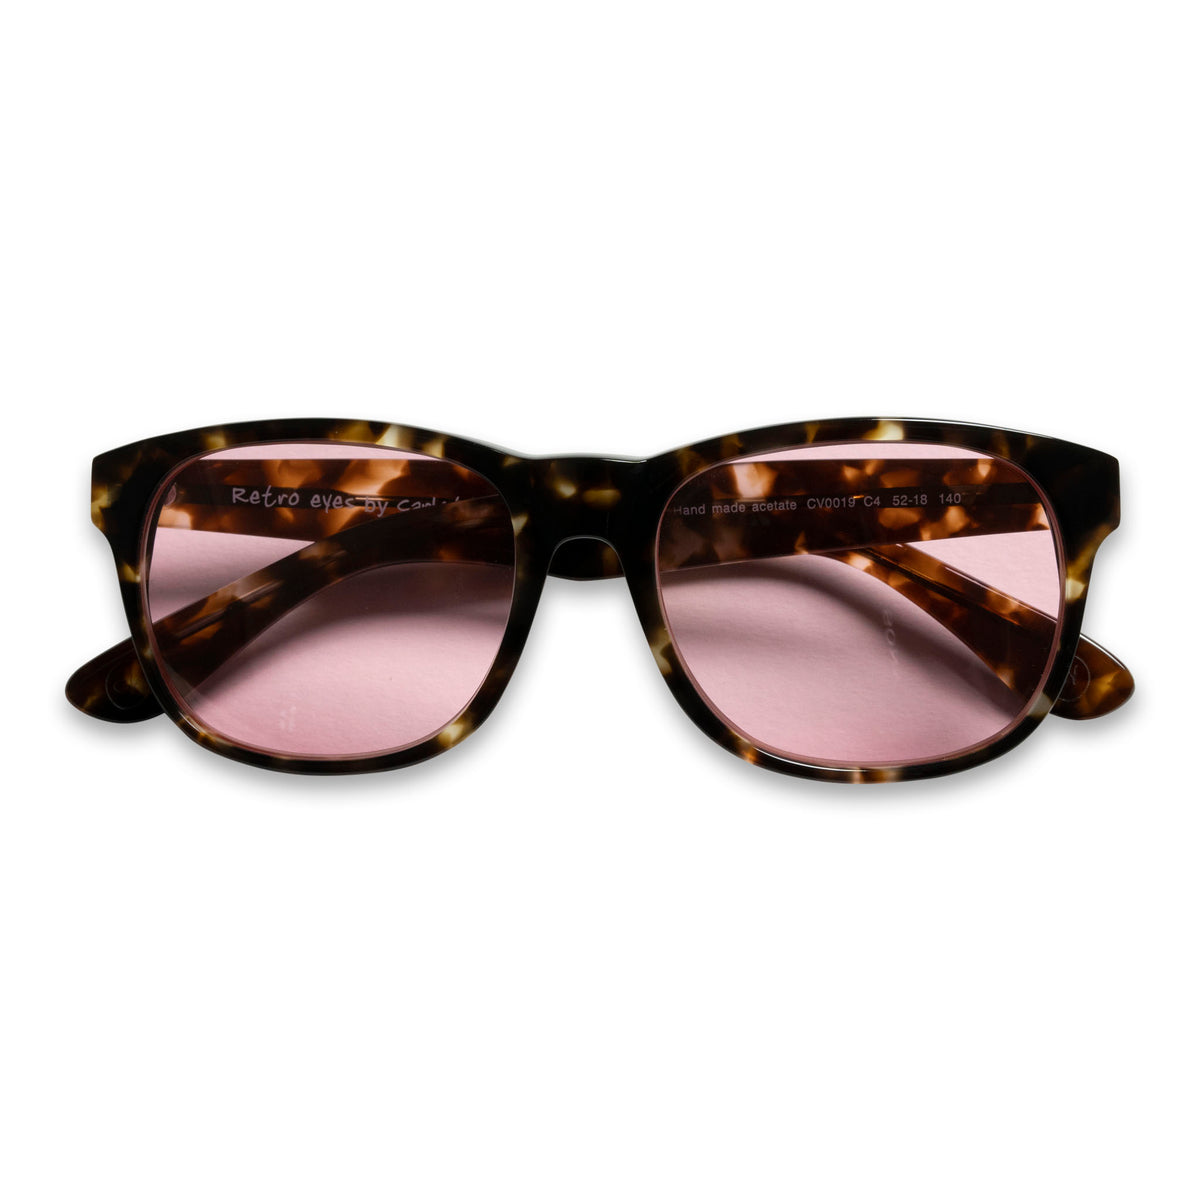 carlottas-village-writer-acetate-sunglasses-havana-pink